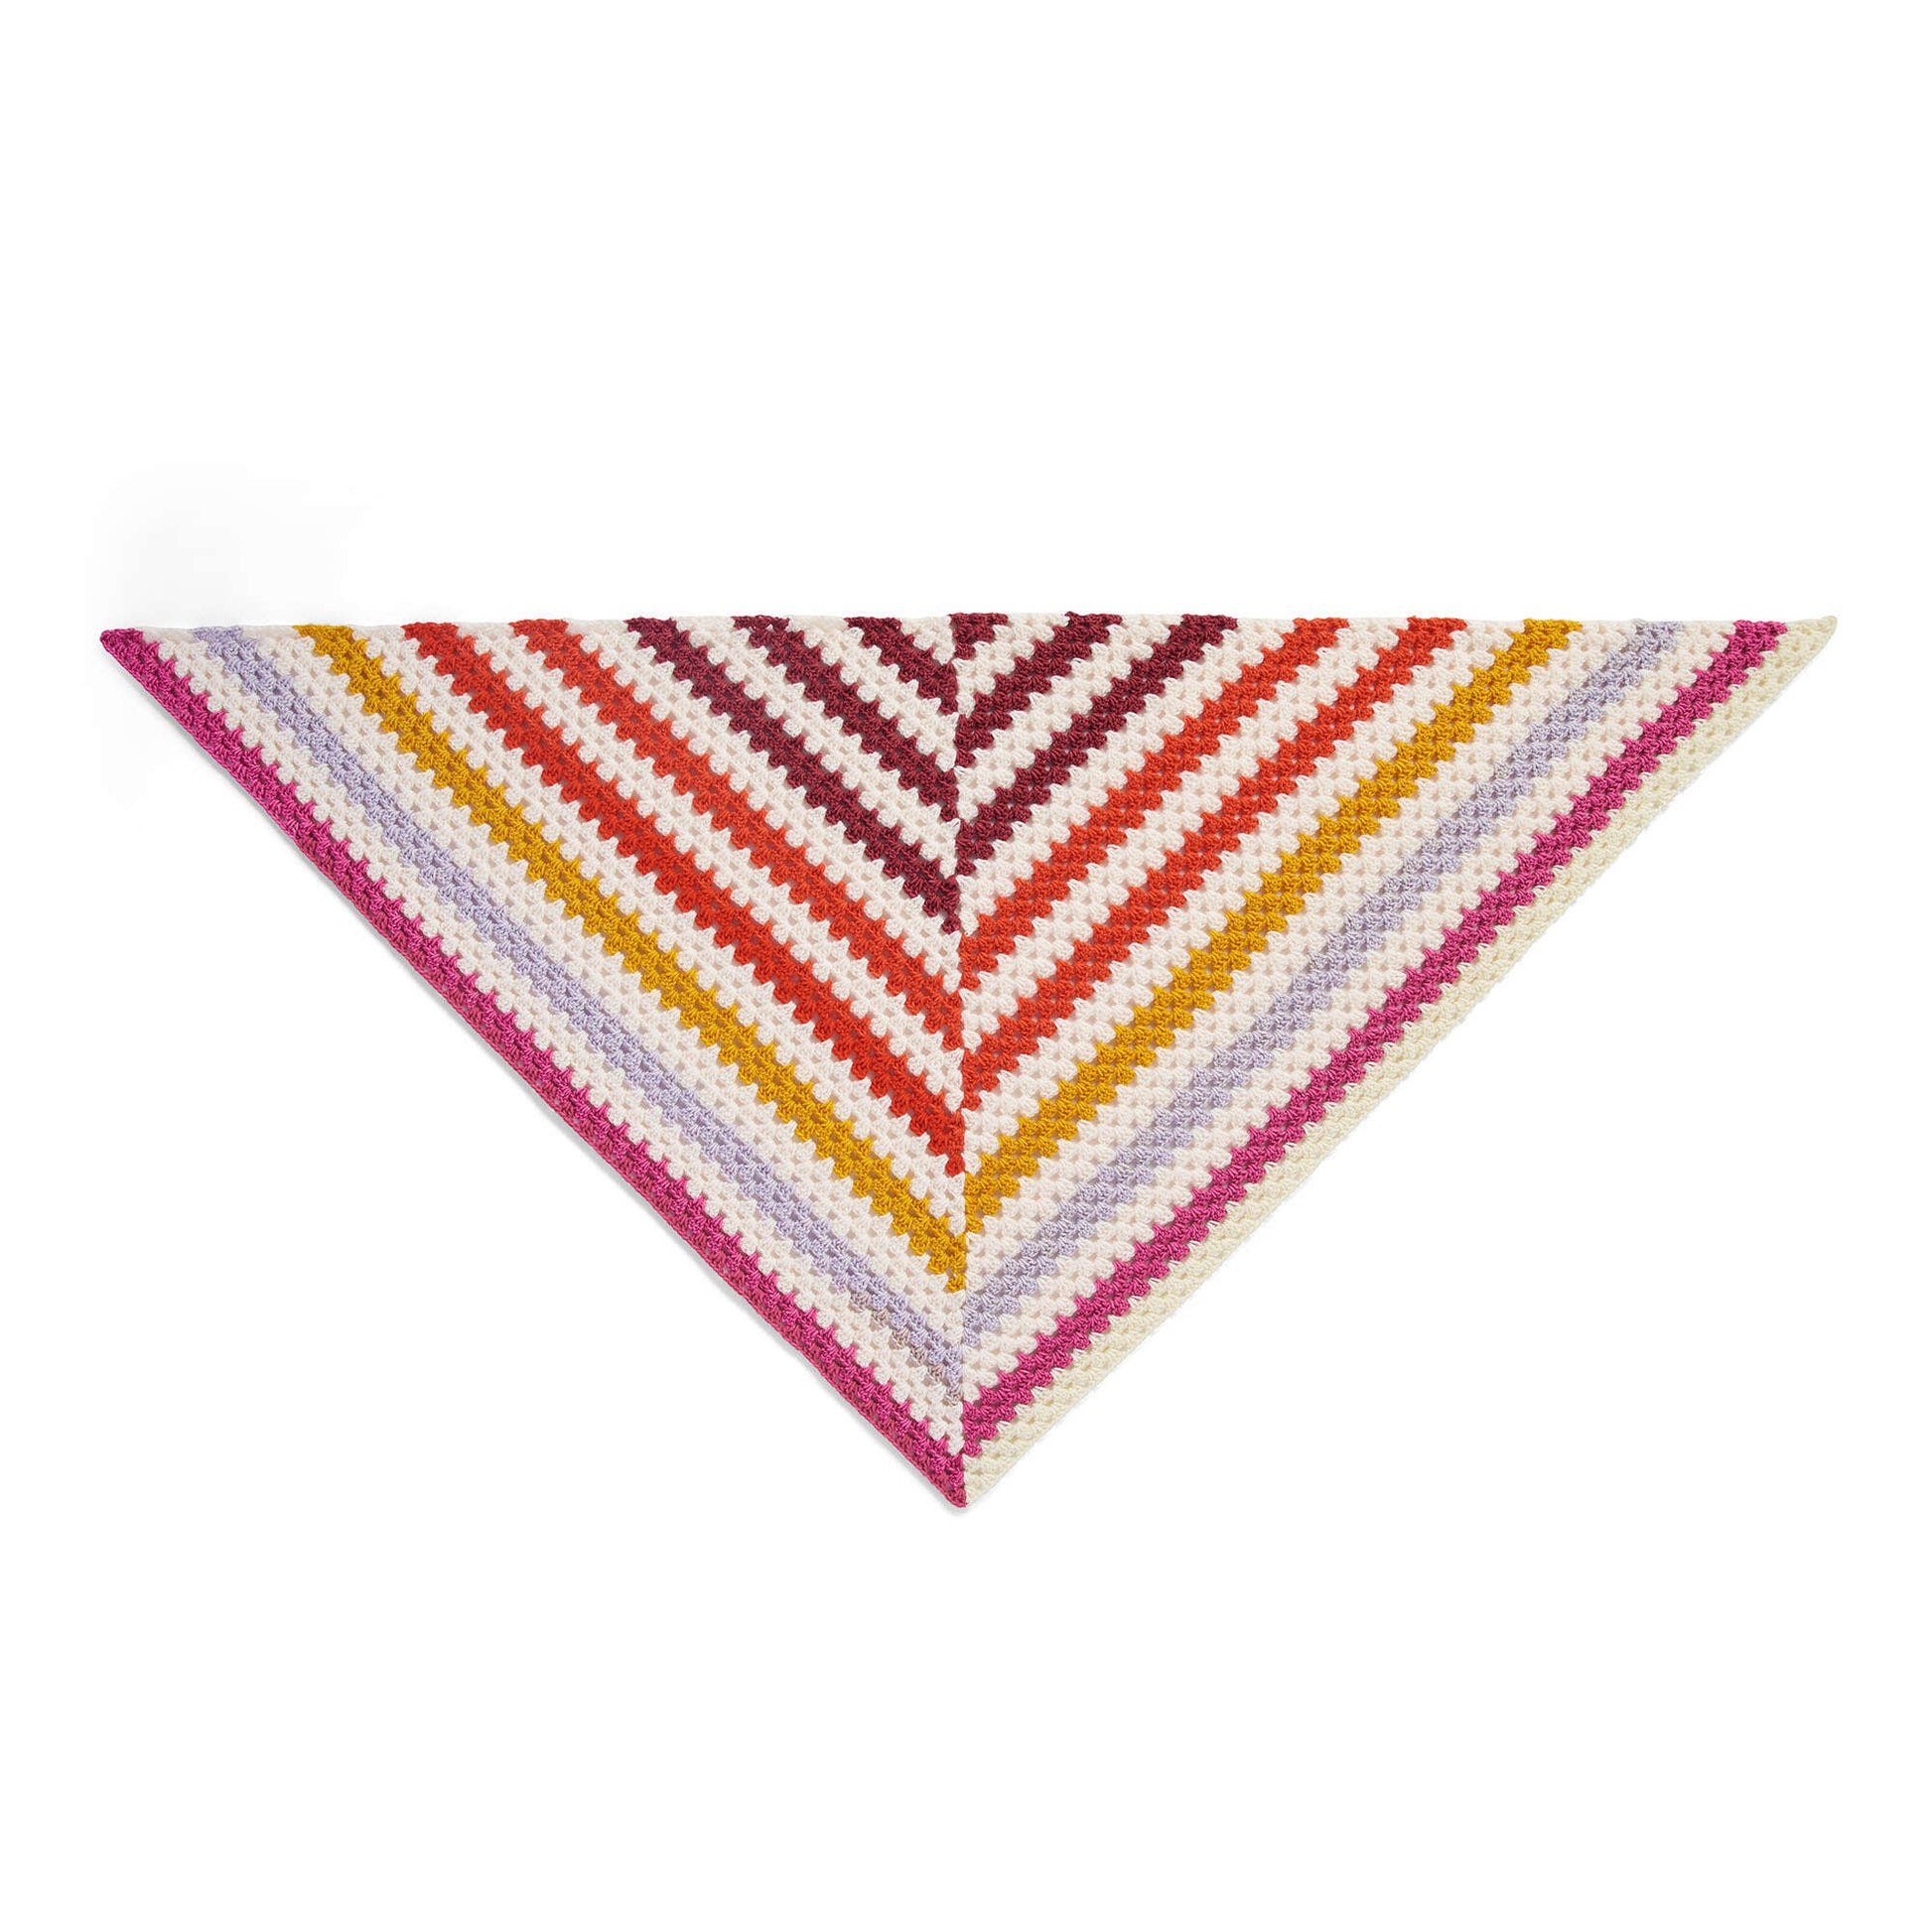 Caron Staggered Stripes Crochet Shawl Cream